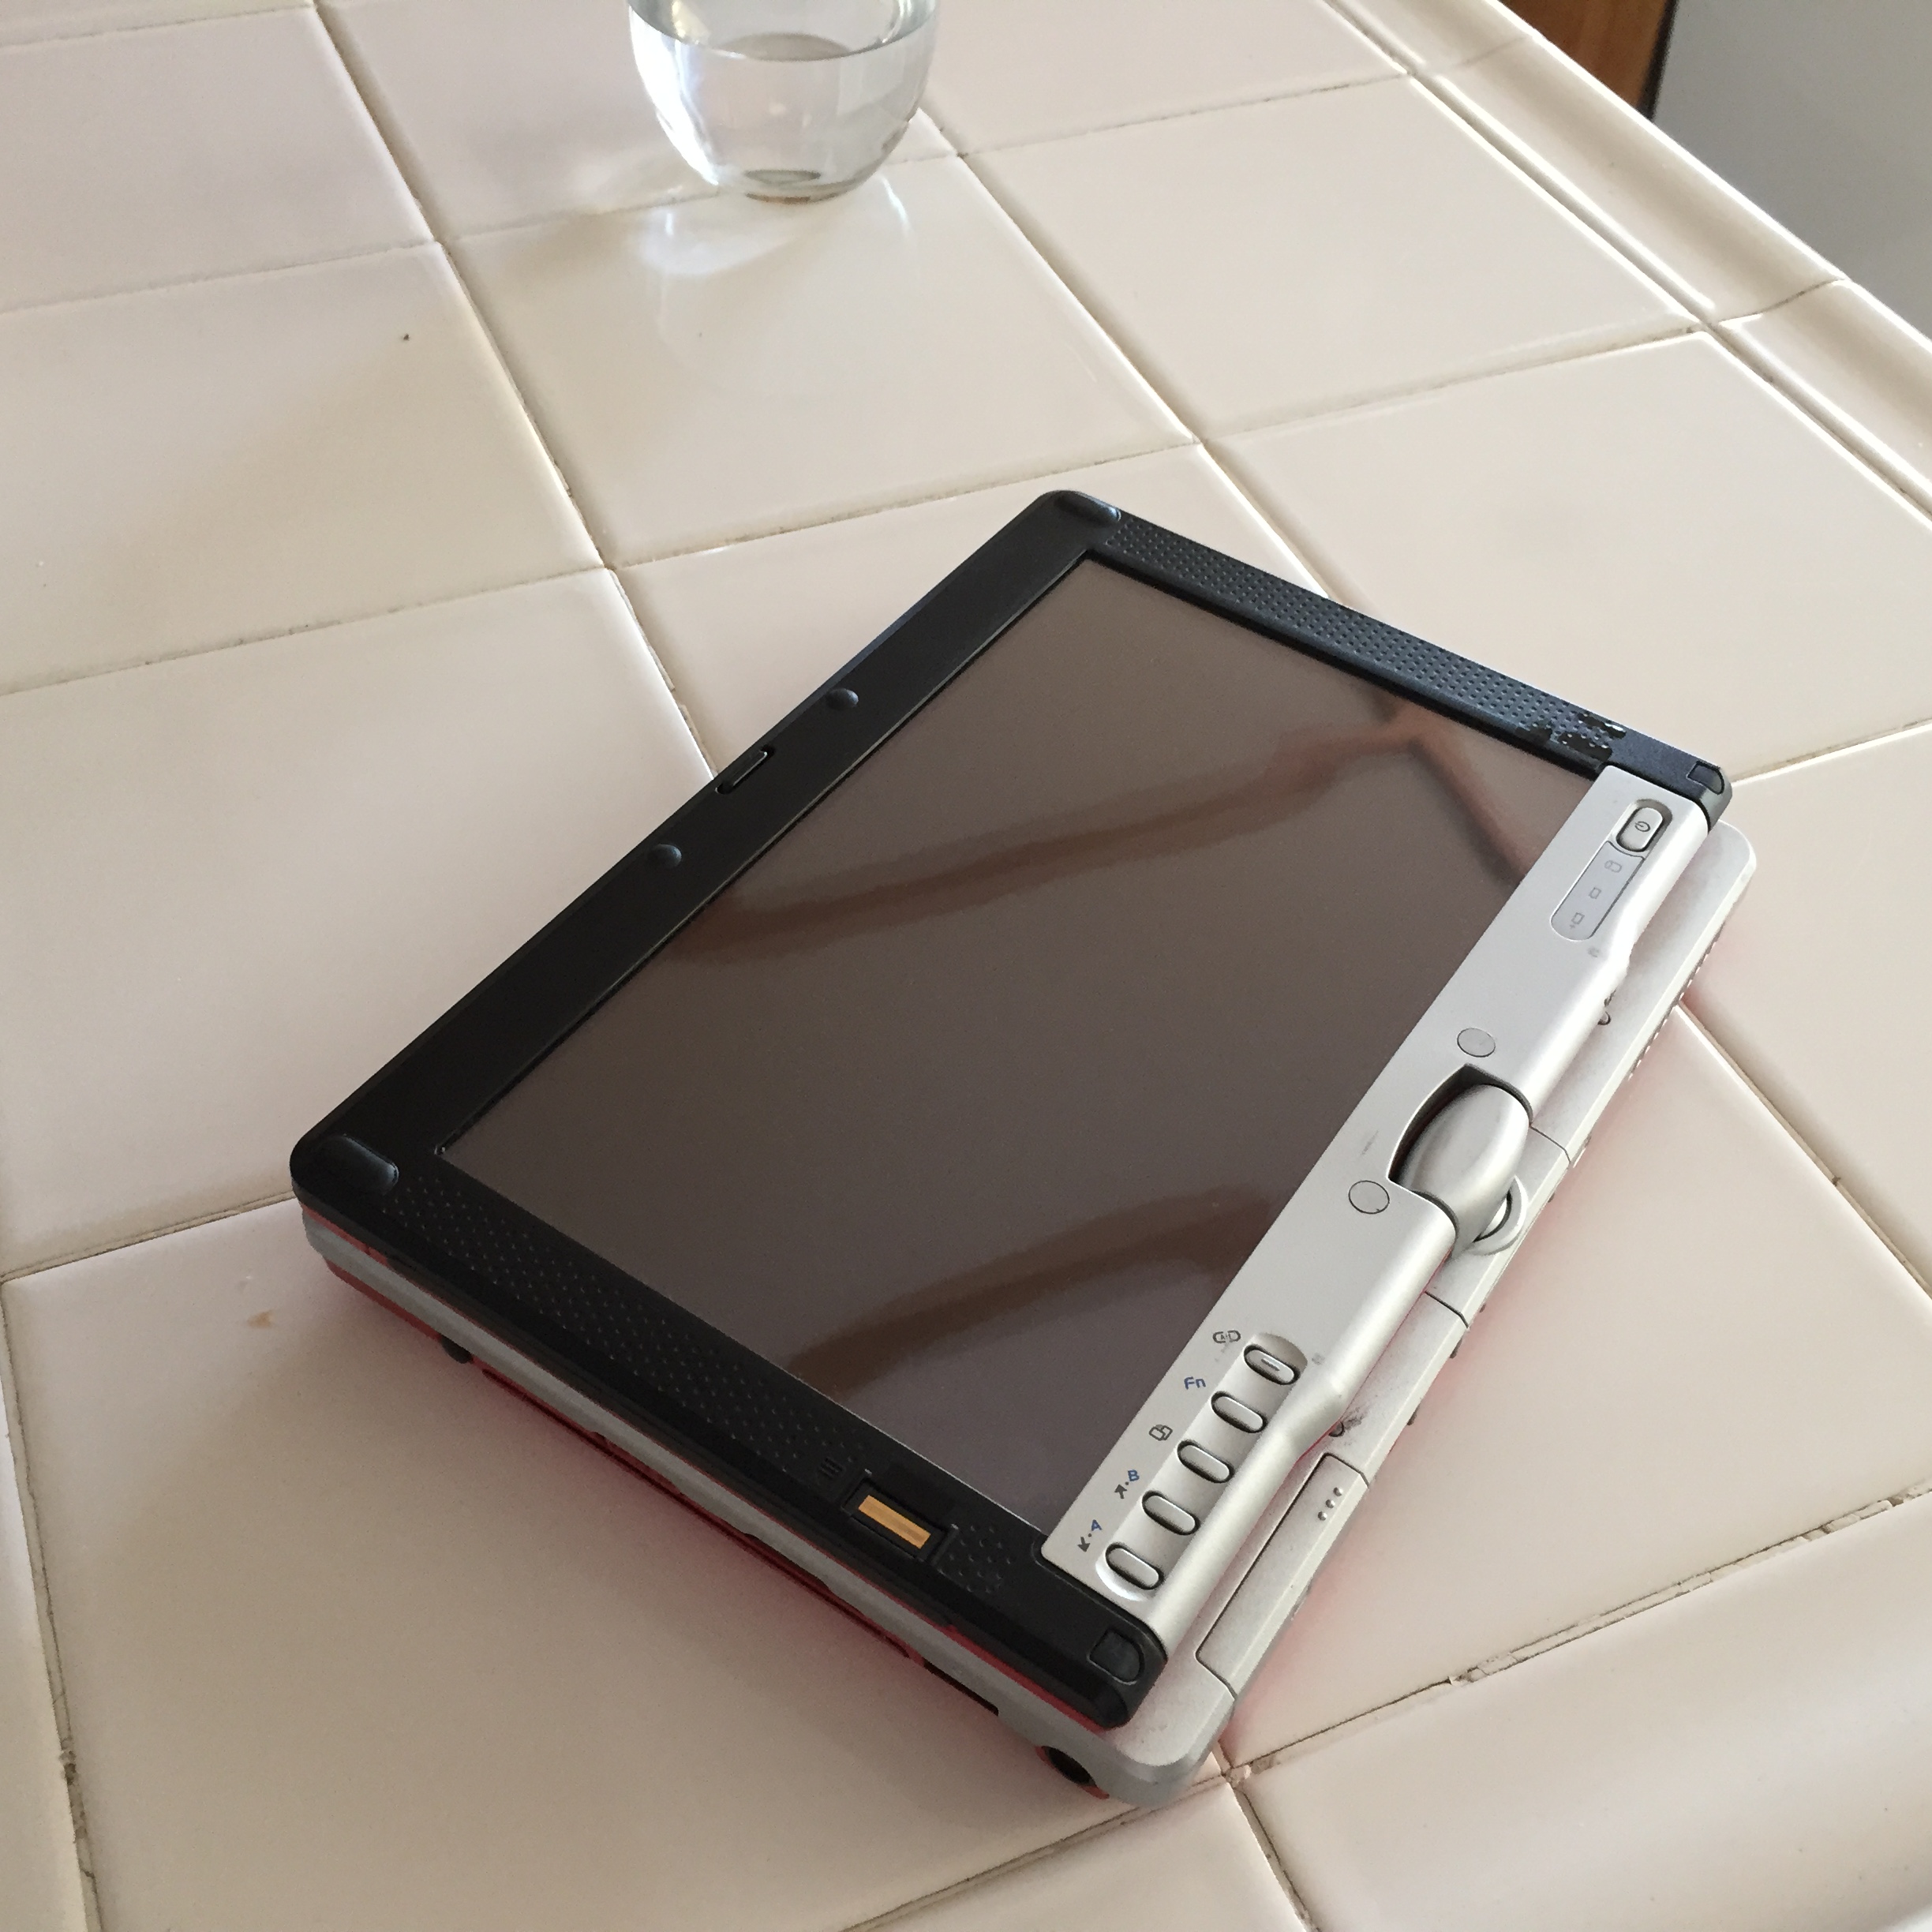 Fujitsu Lifebook Tablet PC And Laptop